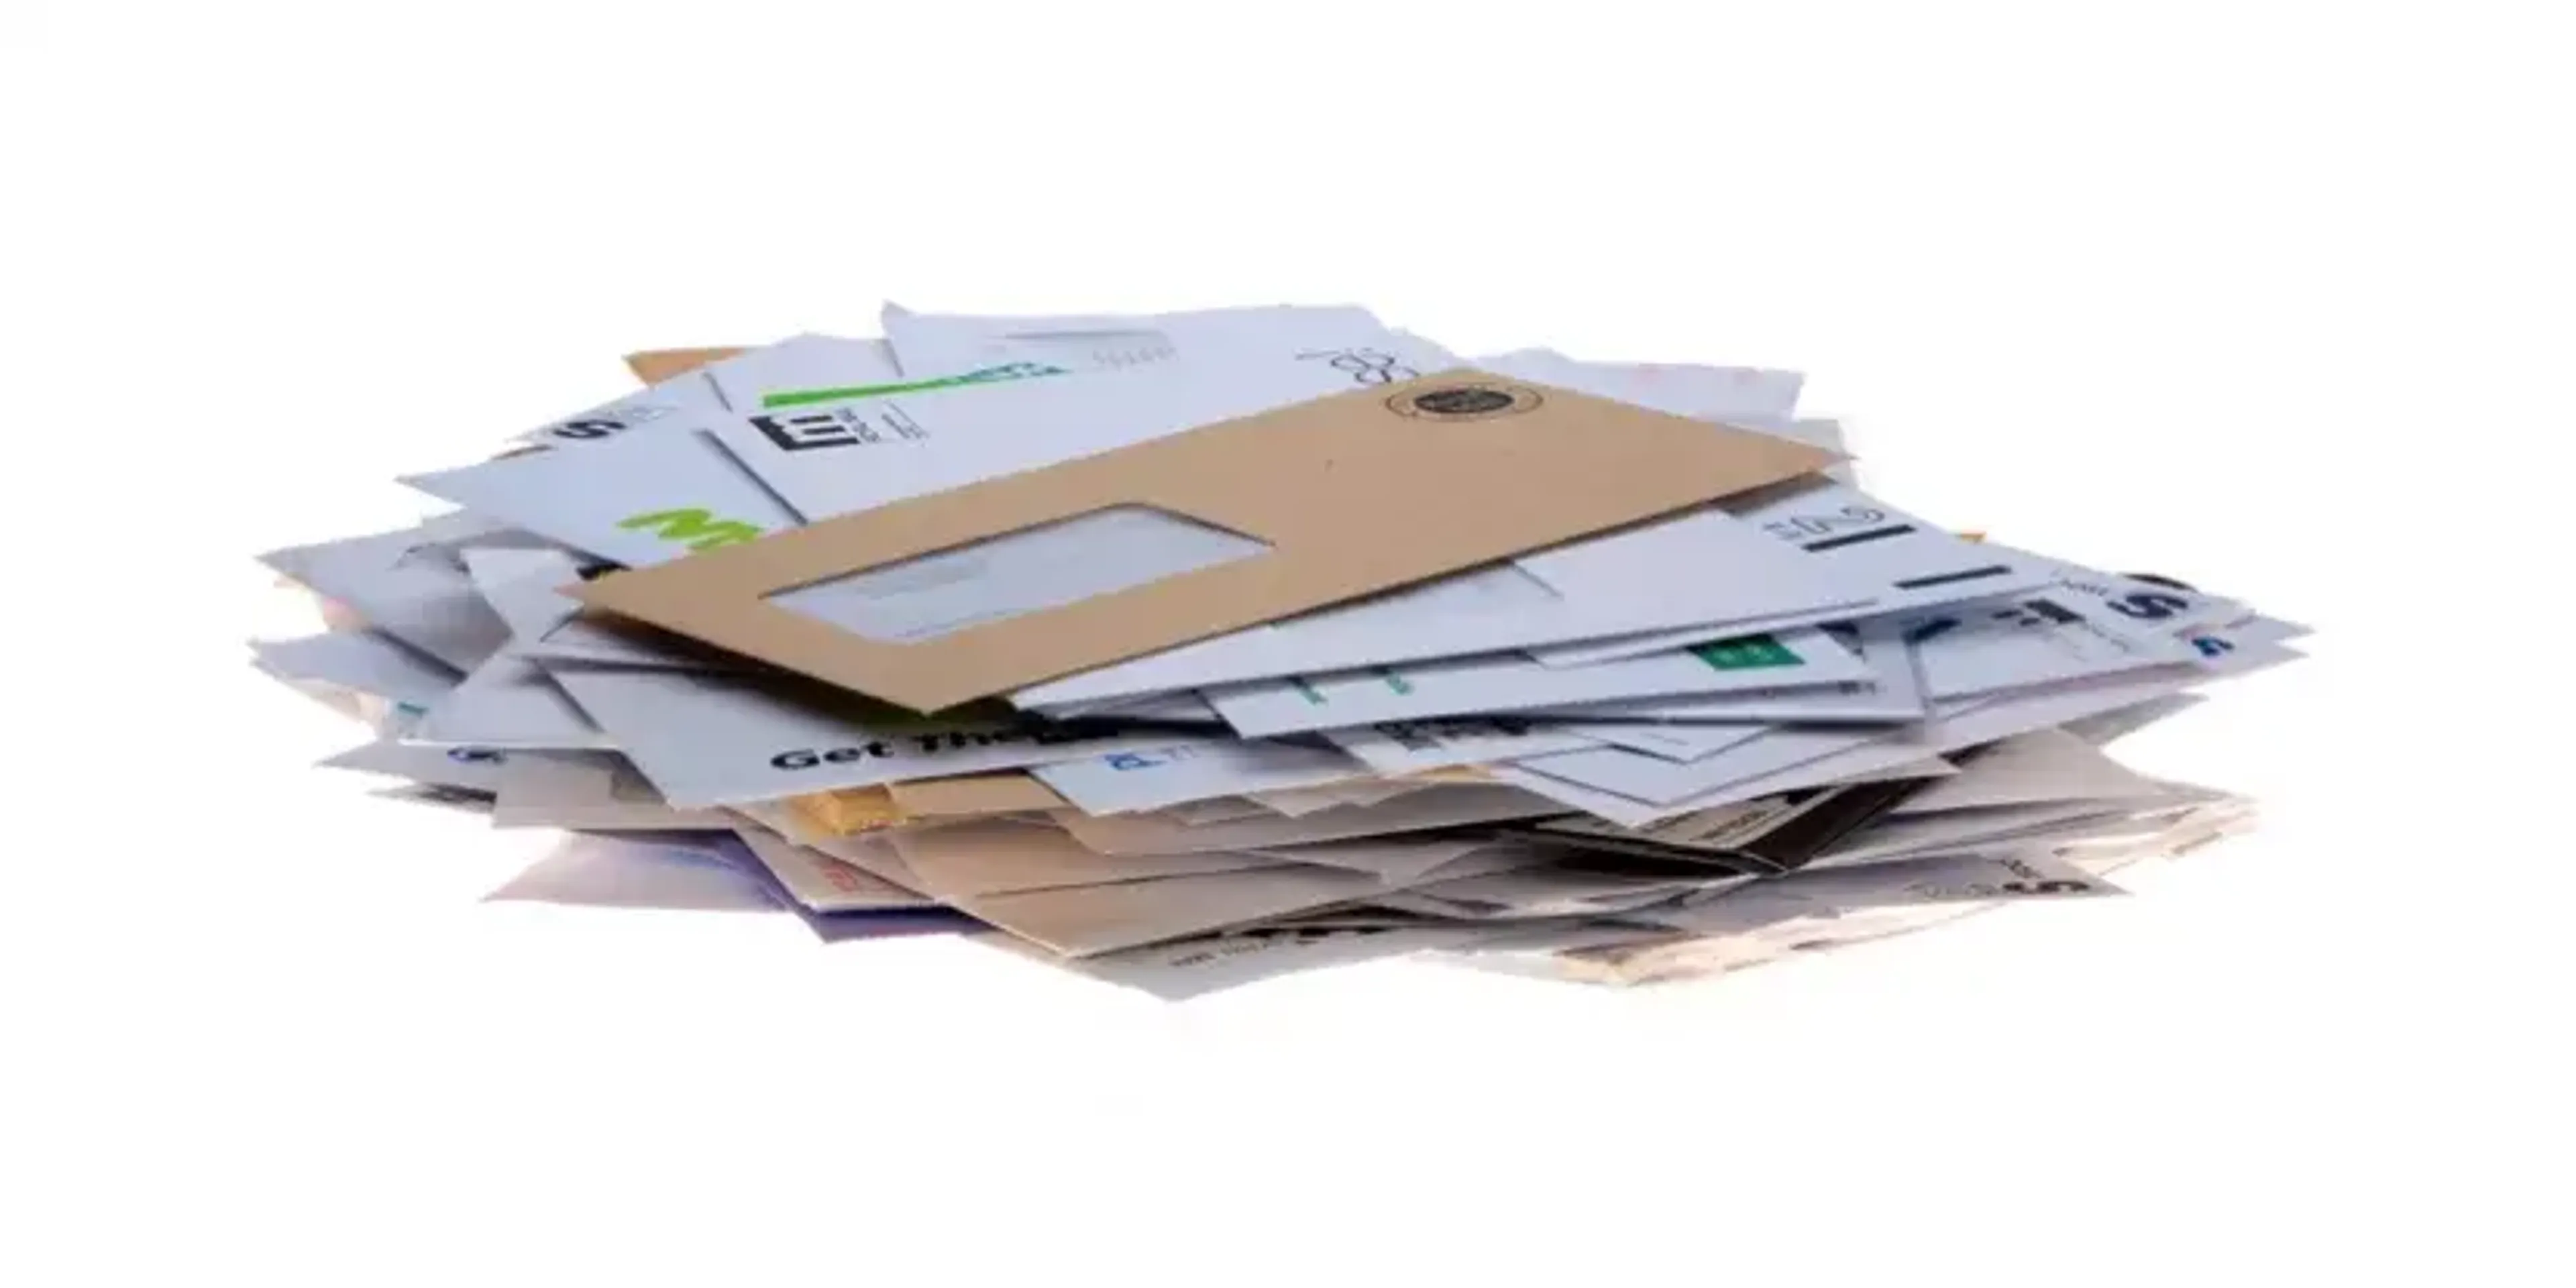 Pile of envelopes